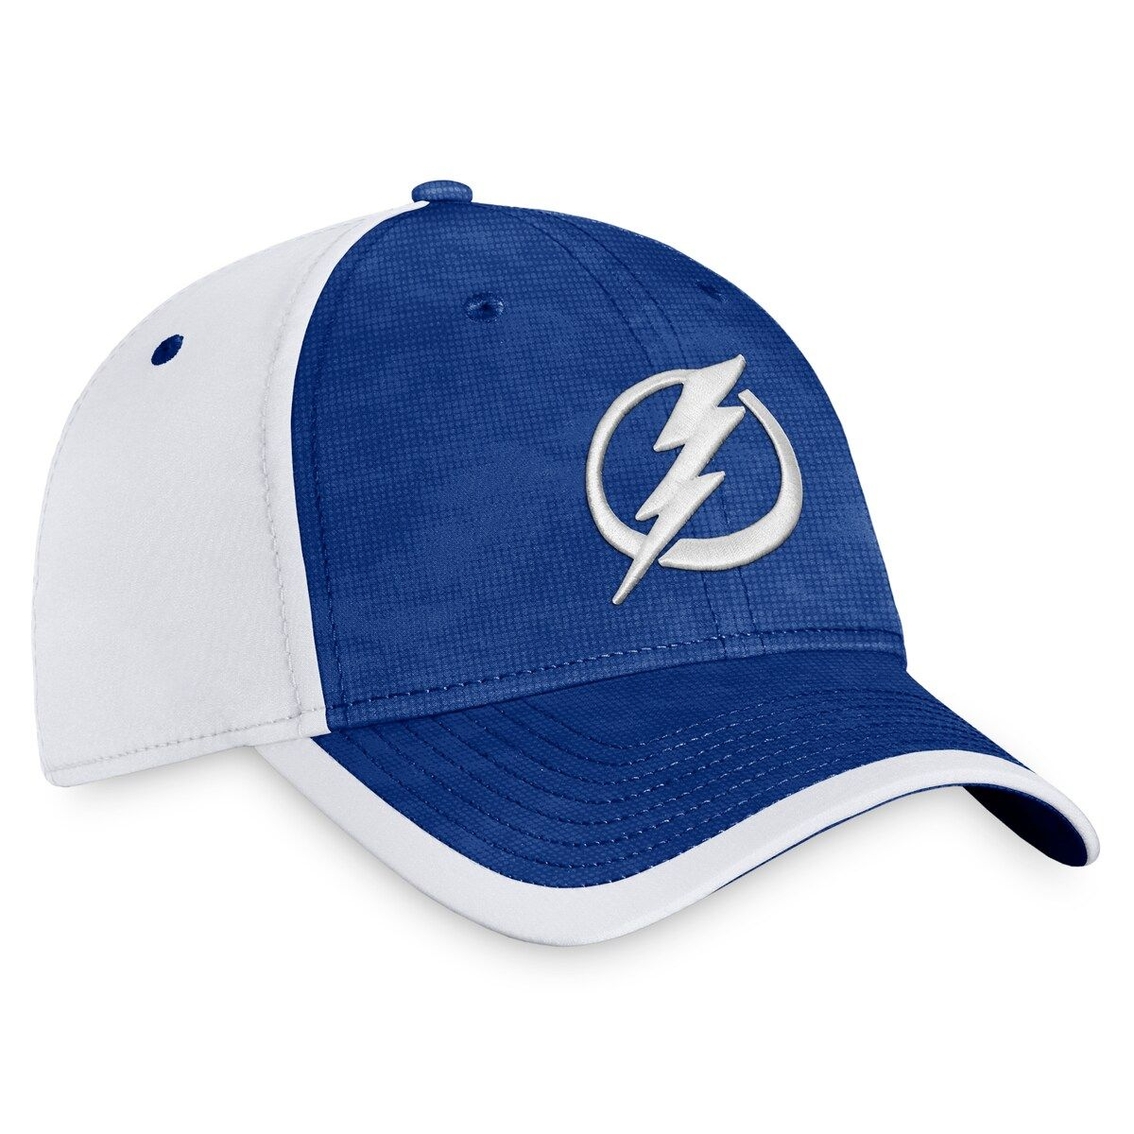 Fanatics Branded Men's Blue/White Tampa Bay Lightning Authentic Pro Rink Camo Flex Hat - Image 4 of 4